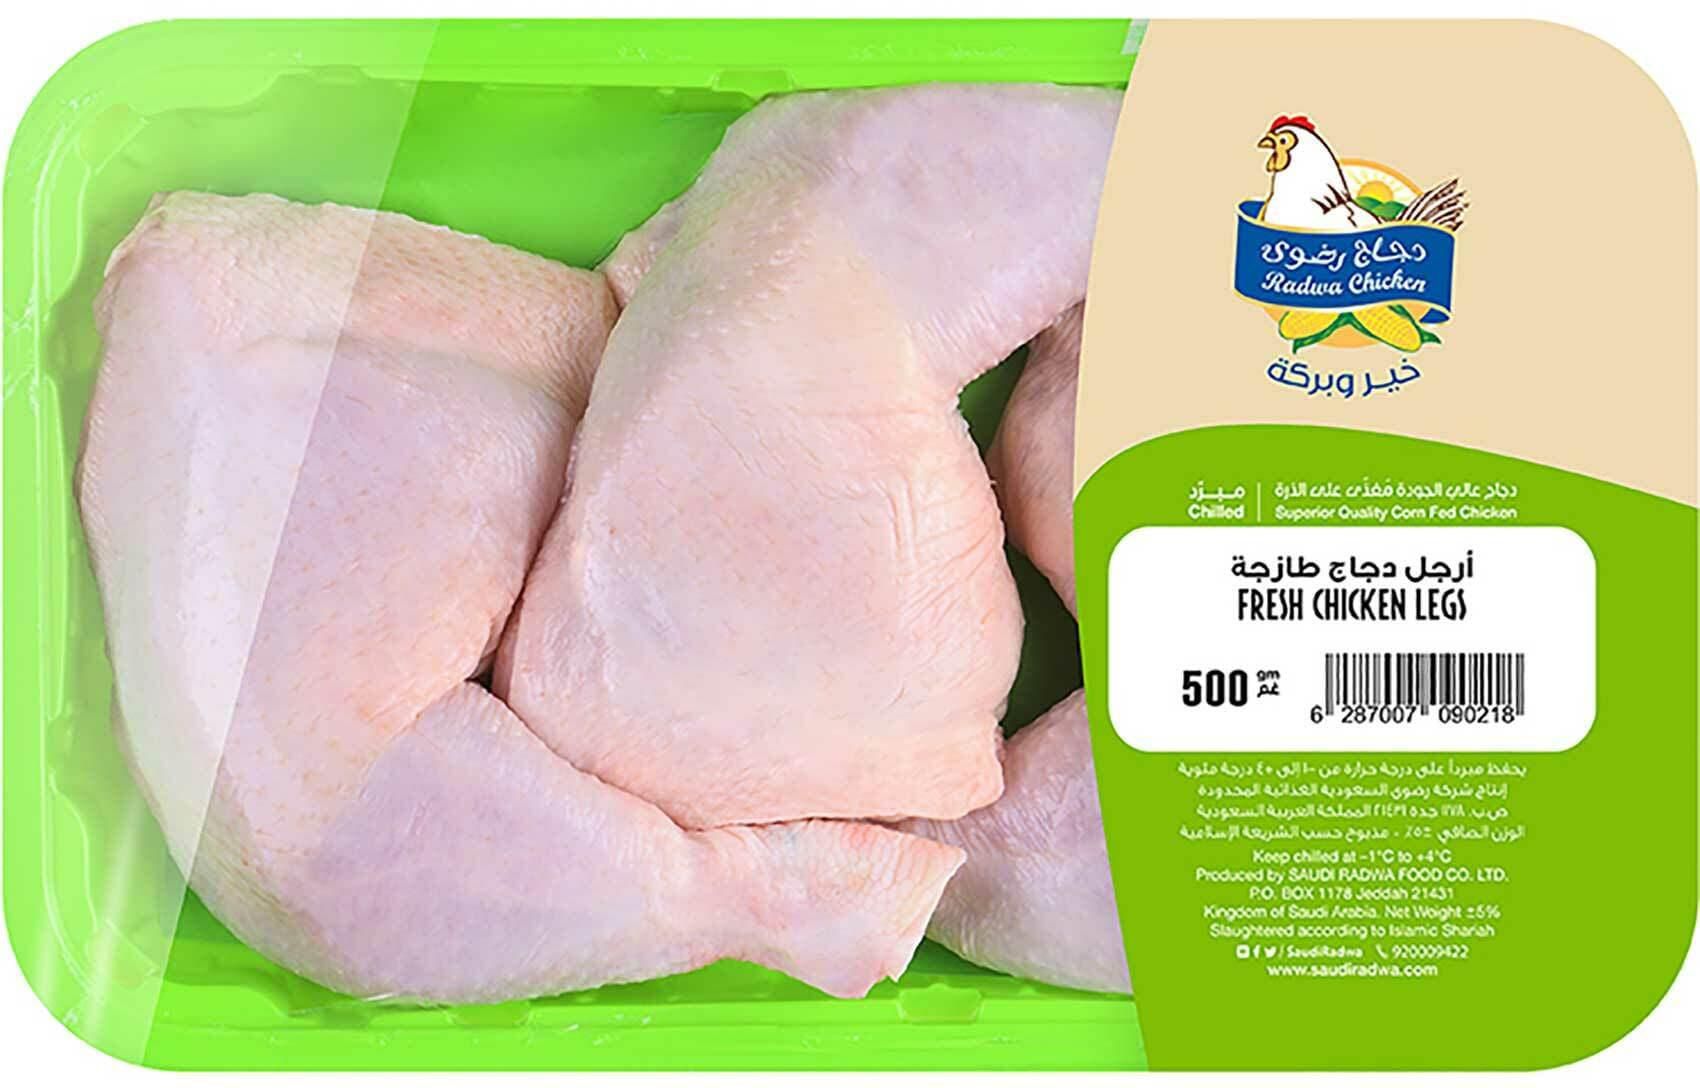 دجاج رضوى أرجل دجاج كاملة 500 جرام